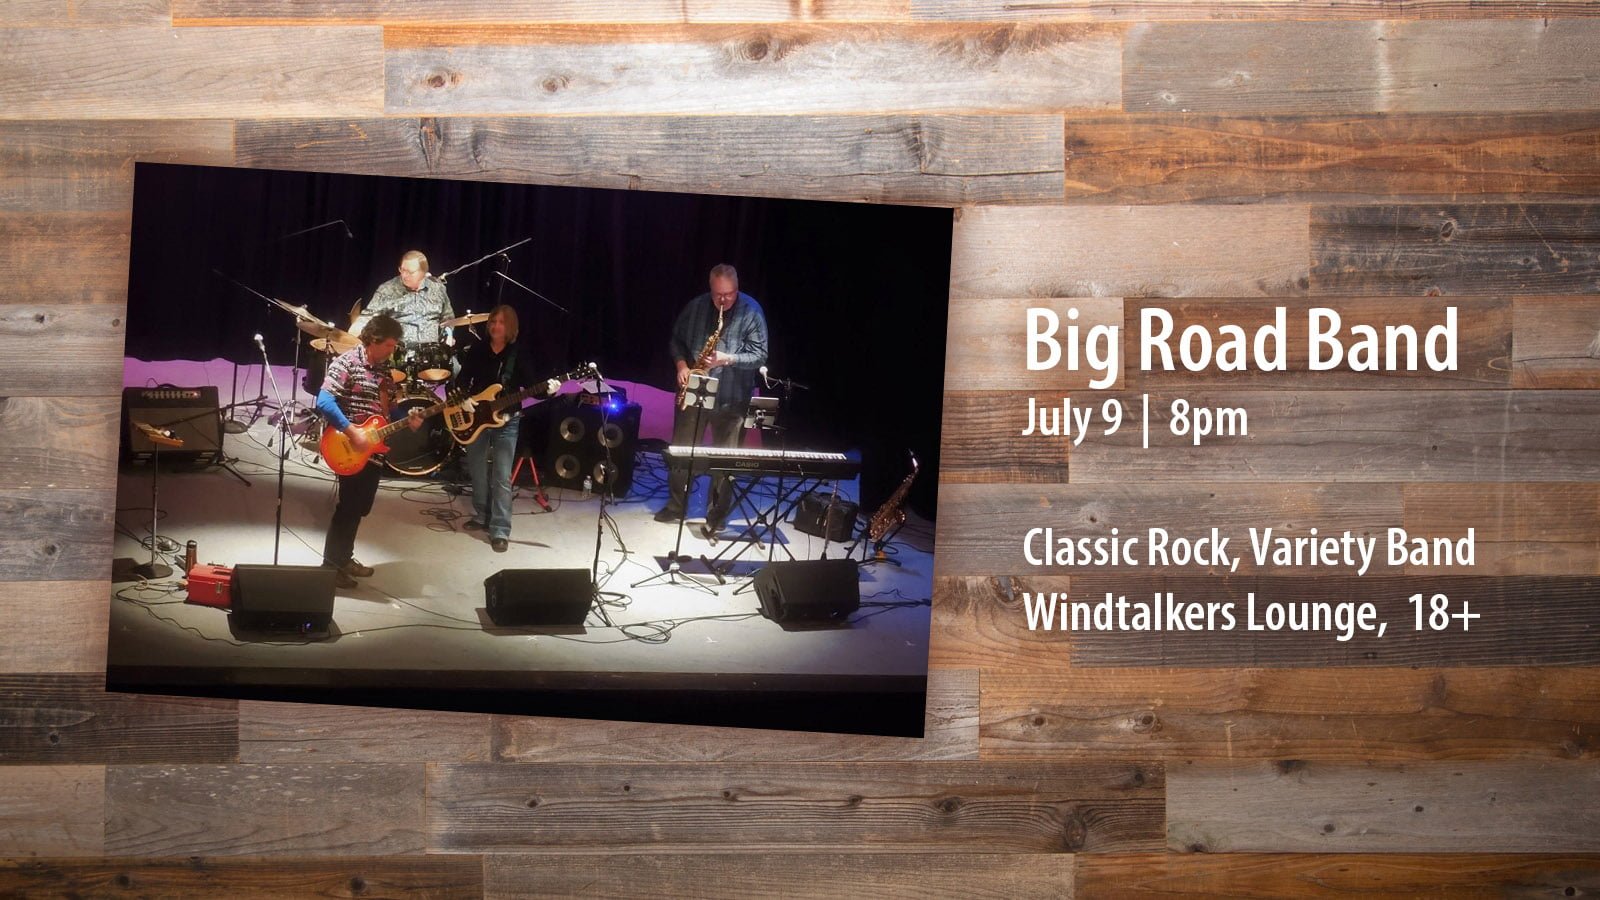 See The Big Road Band Perform Live At Mole Lake Casino In Crandon